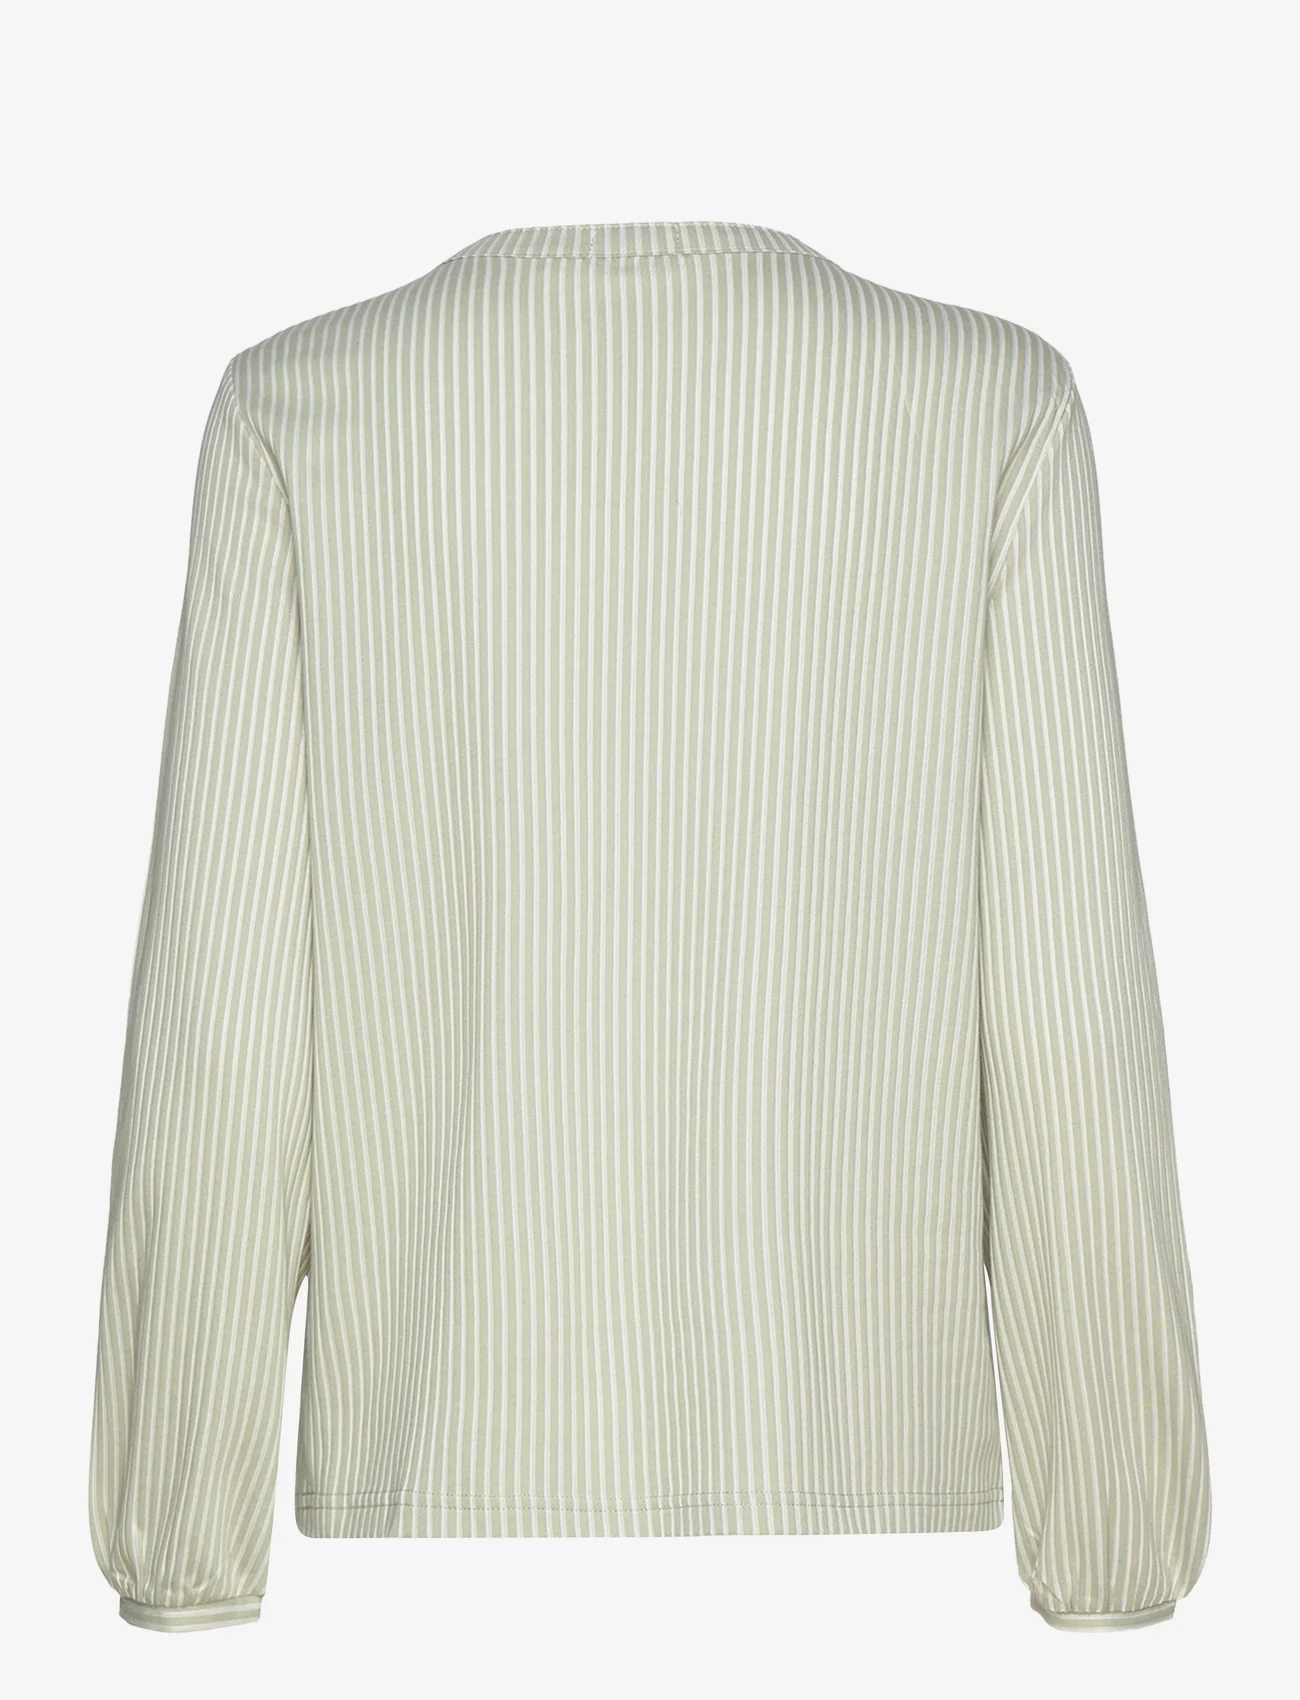 Tom Tailor - T-shirt blouse vertical stripe - palaidinės ilgomis rankovėmis - desert green white thin stripe - 1